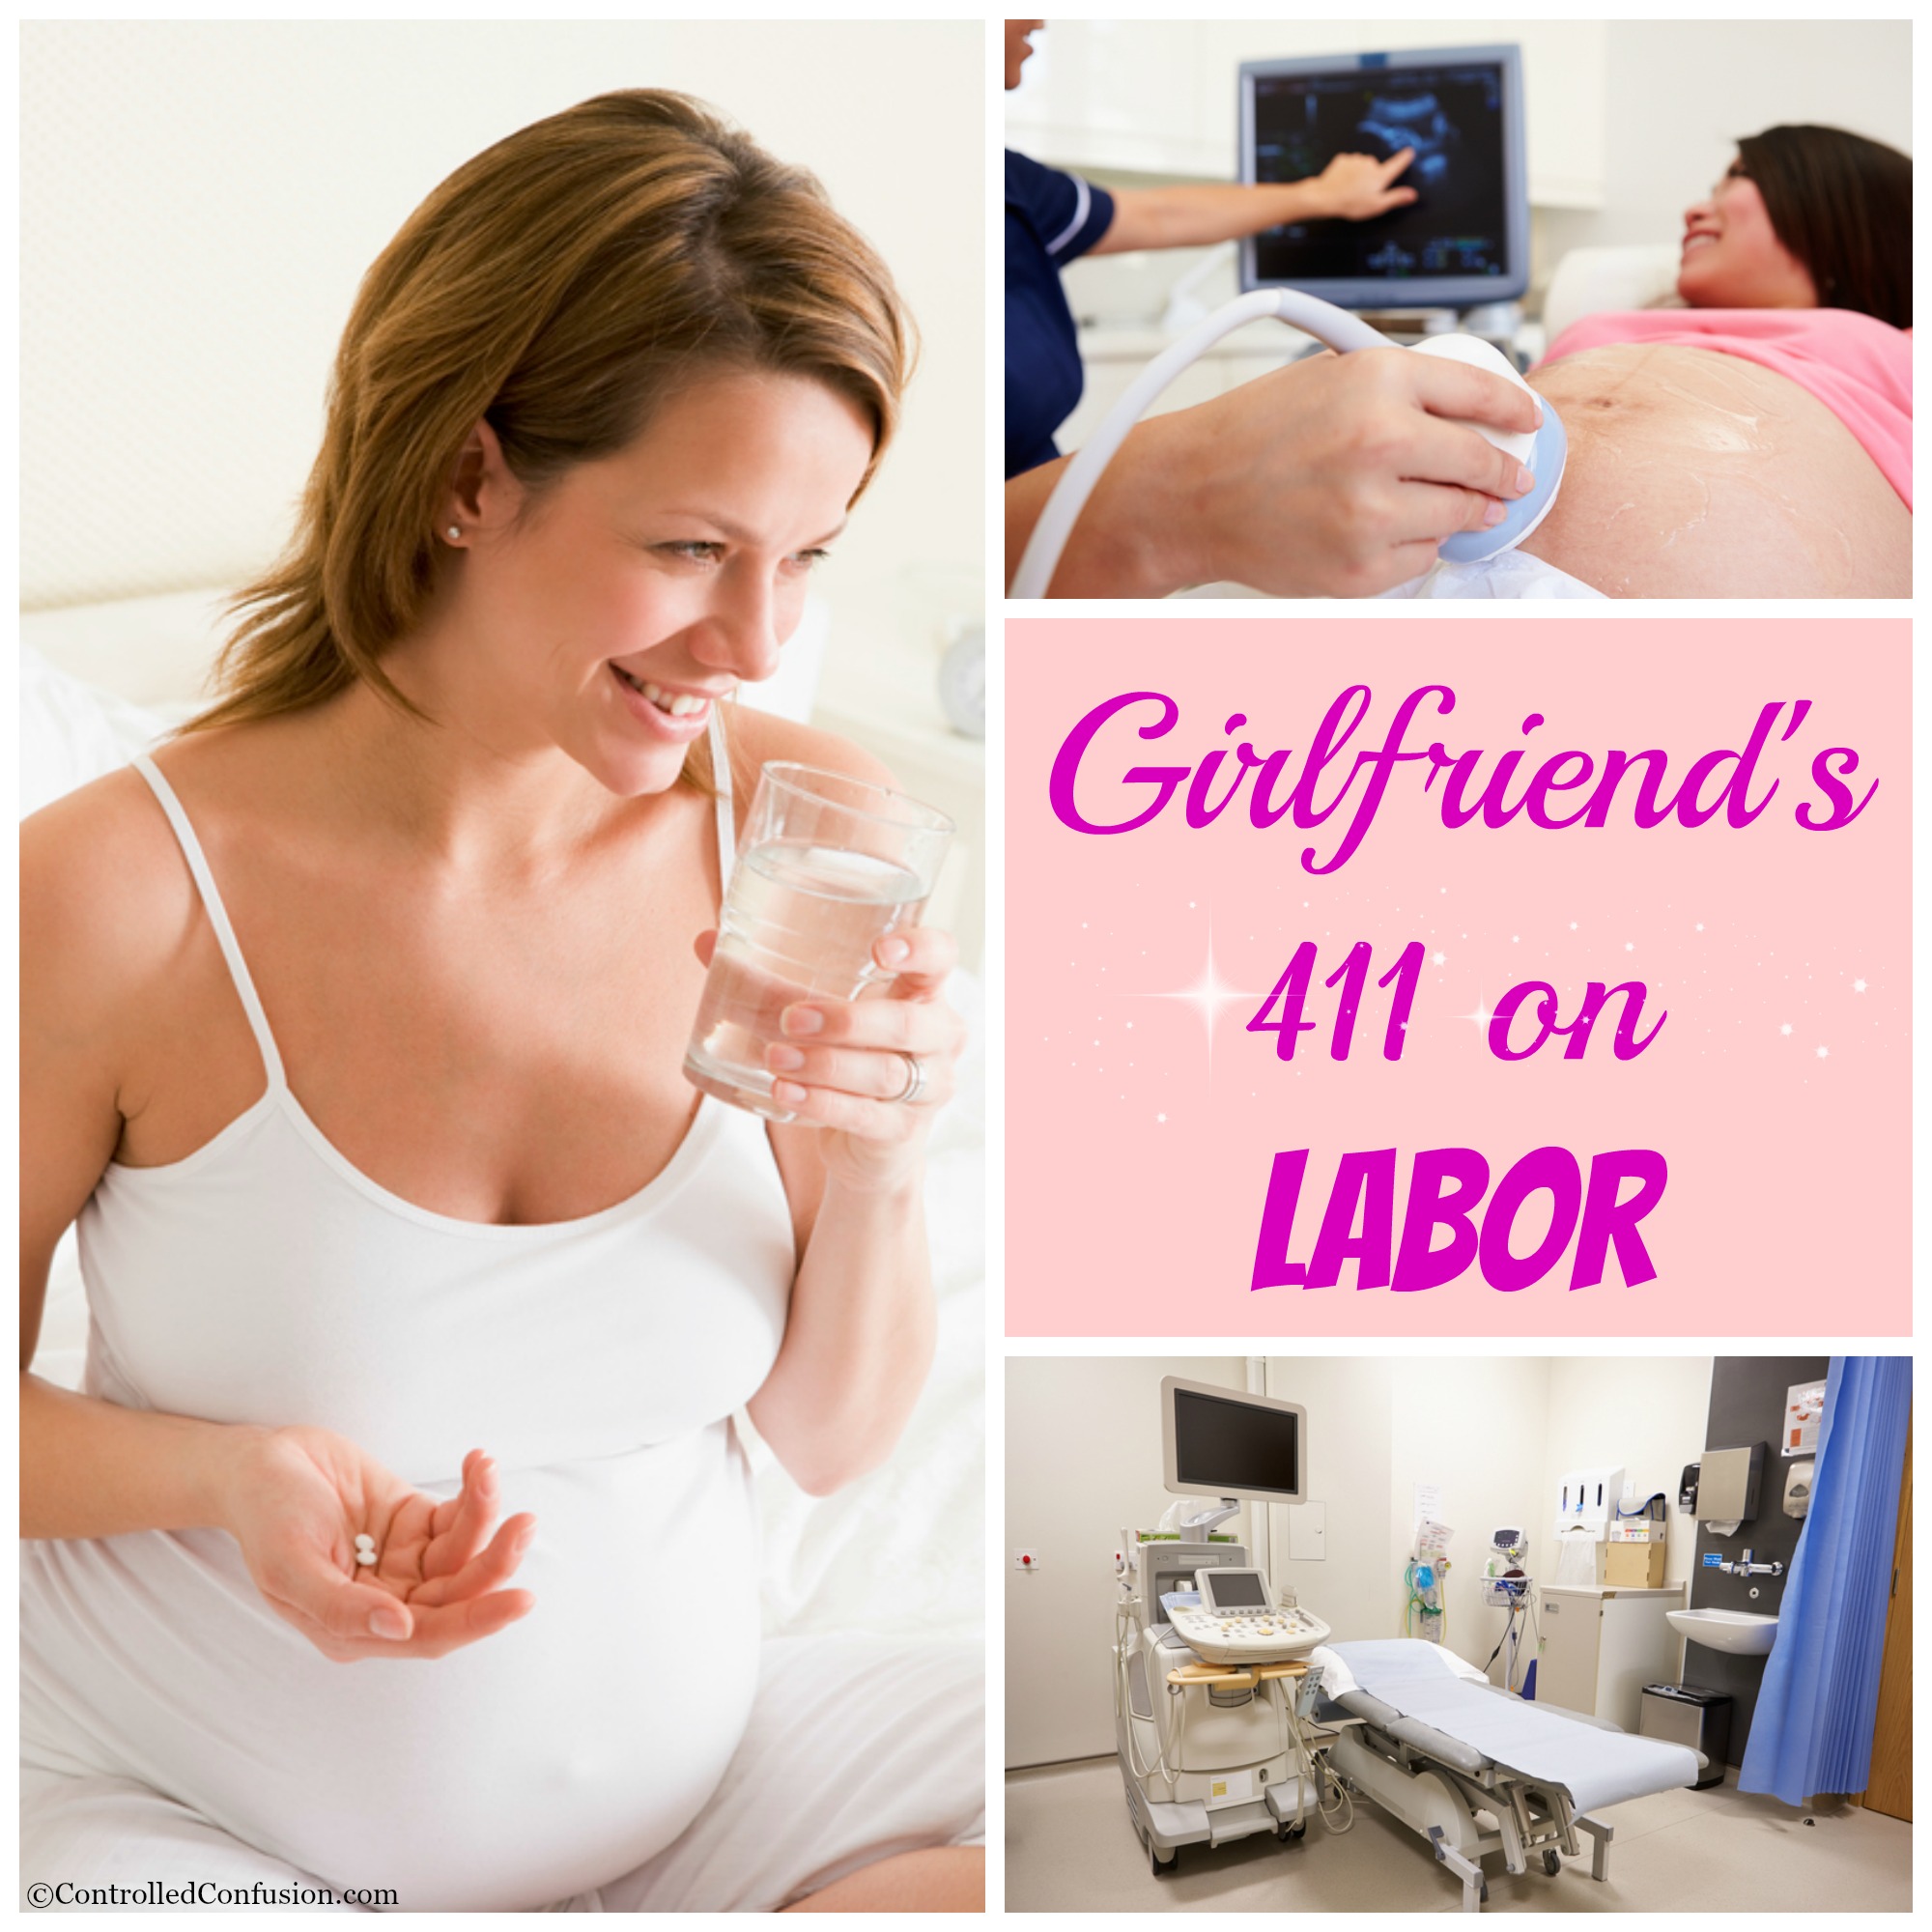 Girlfriend’s 411 on Labor